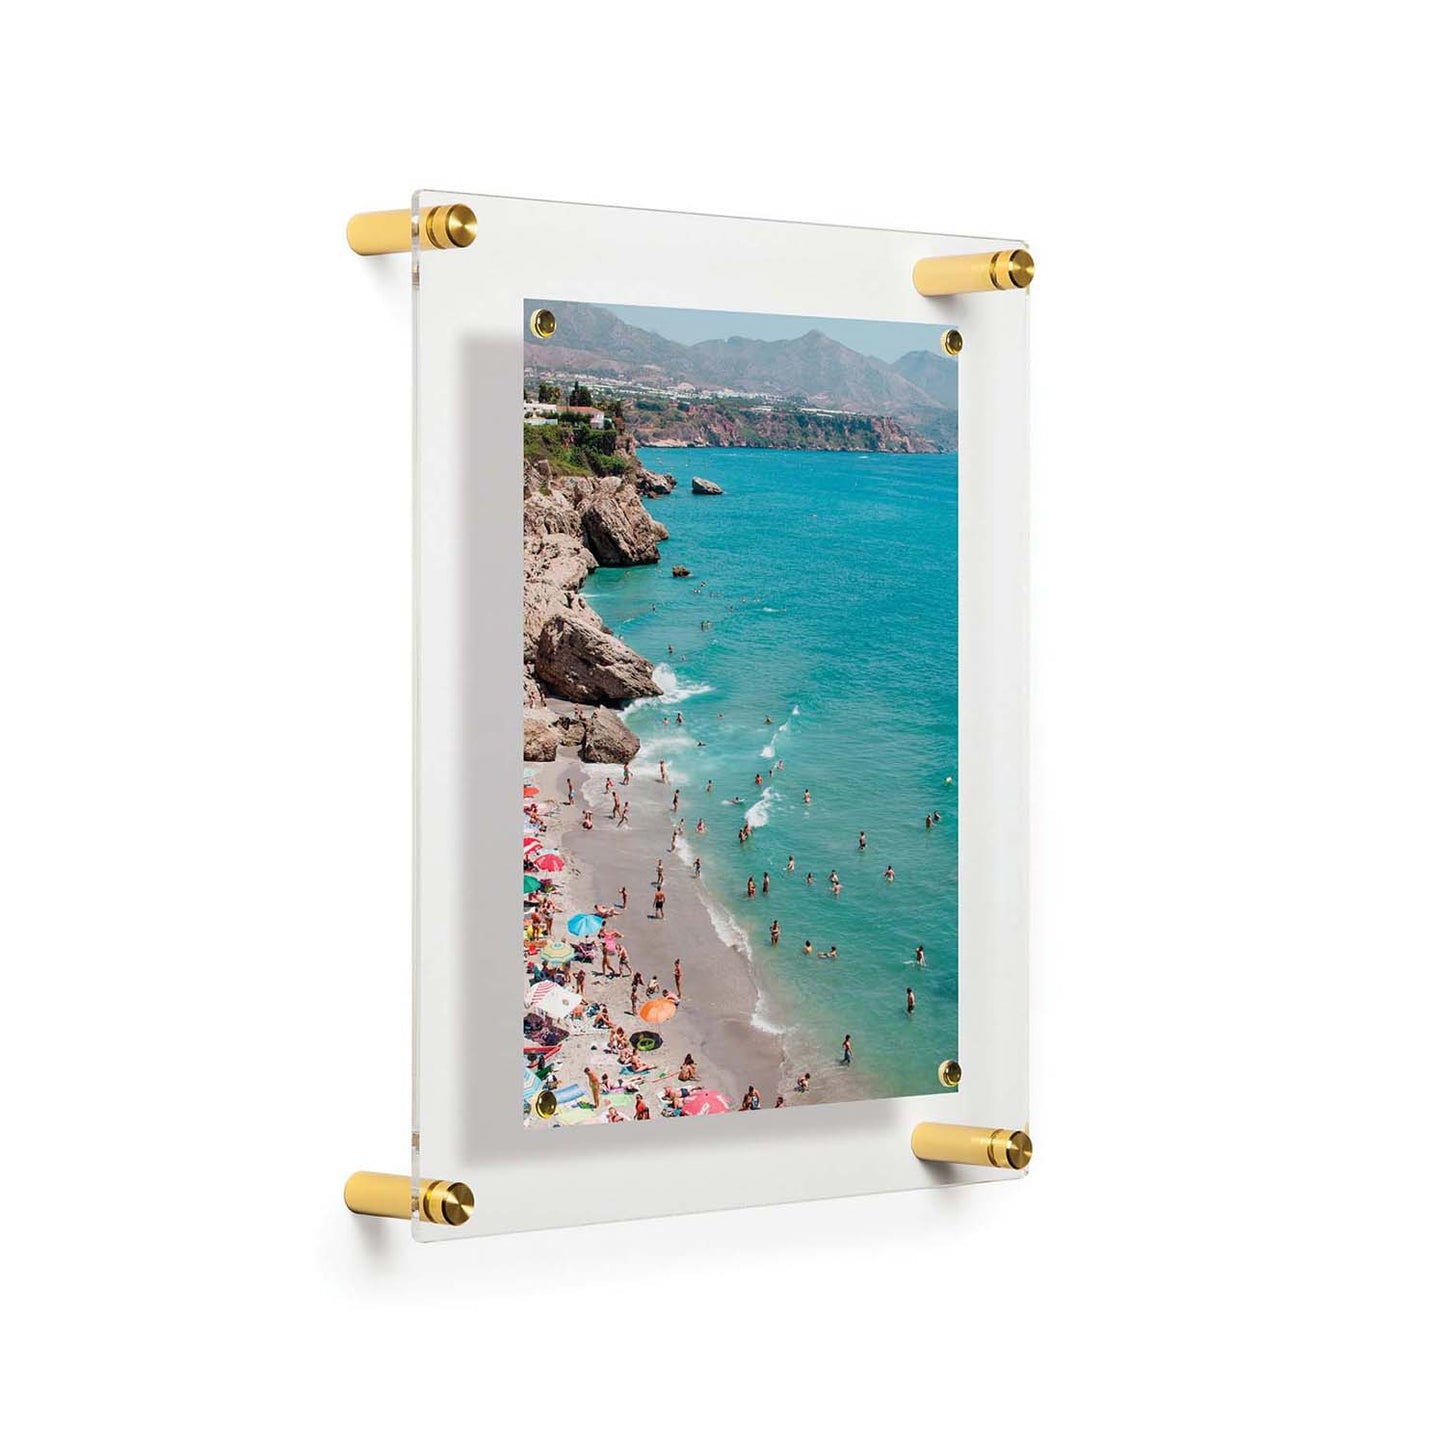 12" x 14" Single Panel Acrylic Floating Frame for 8" x 10" Art